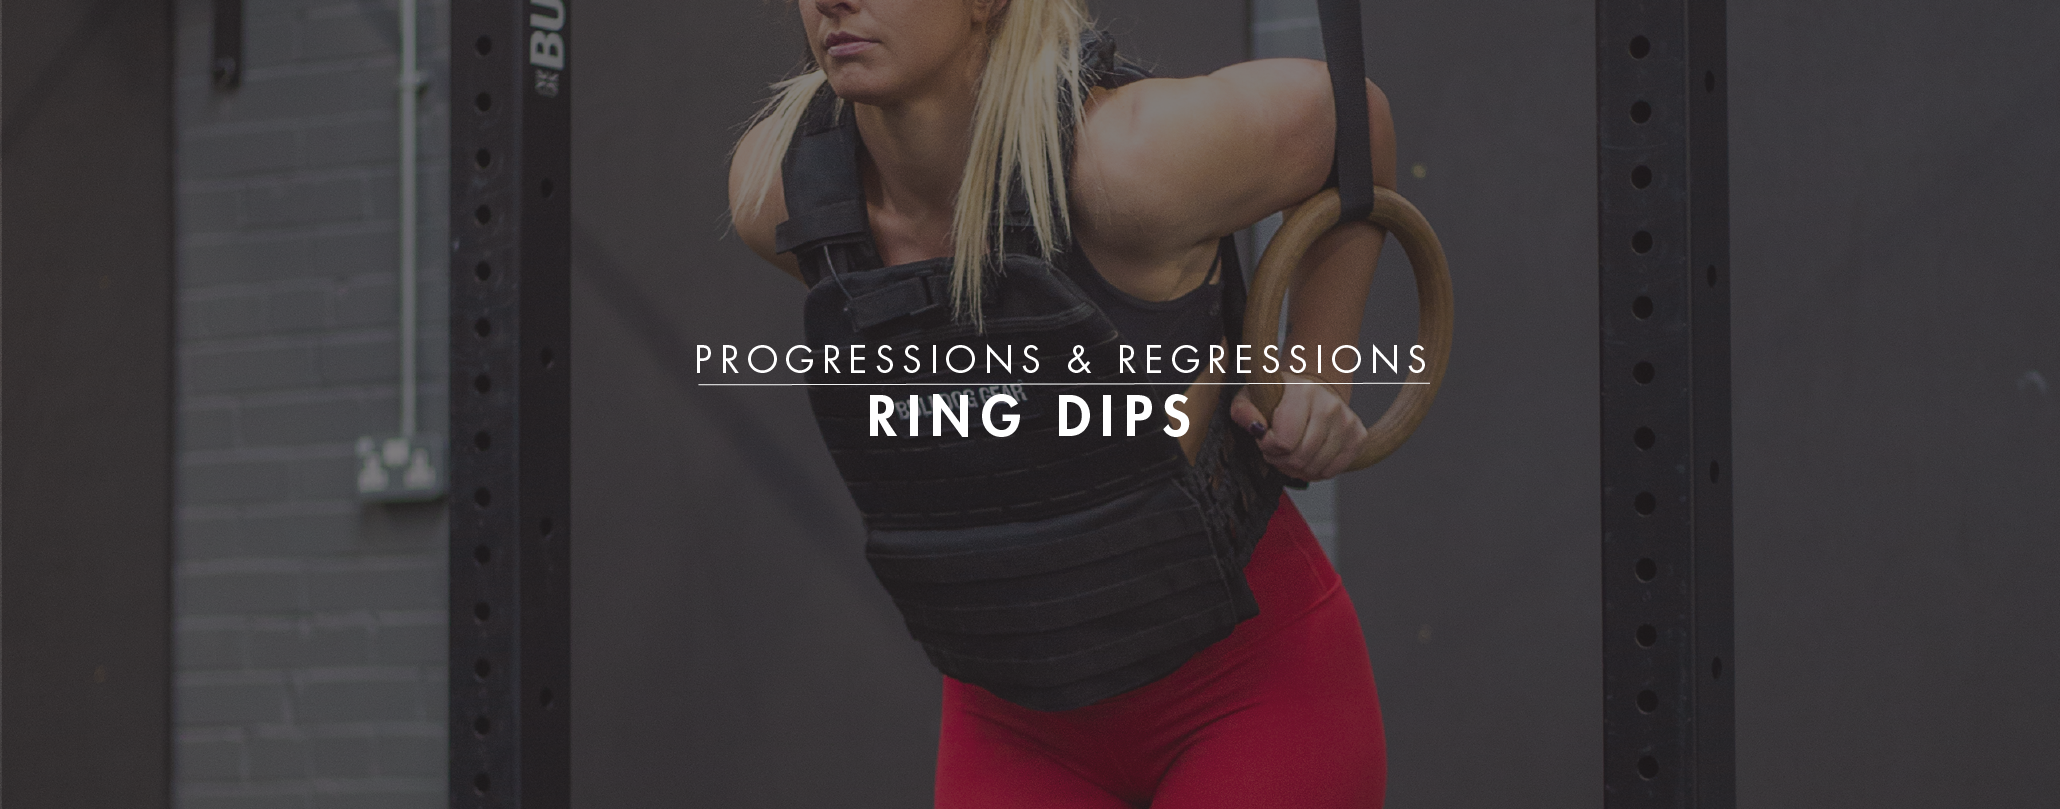 Progressions & Regressions: Ring Dips